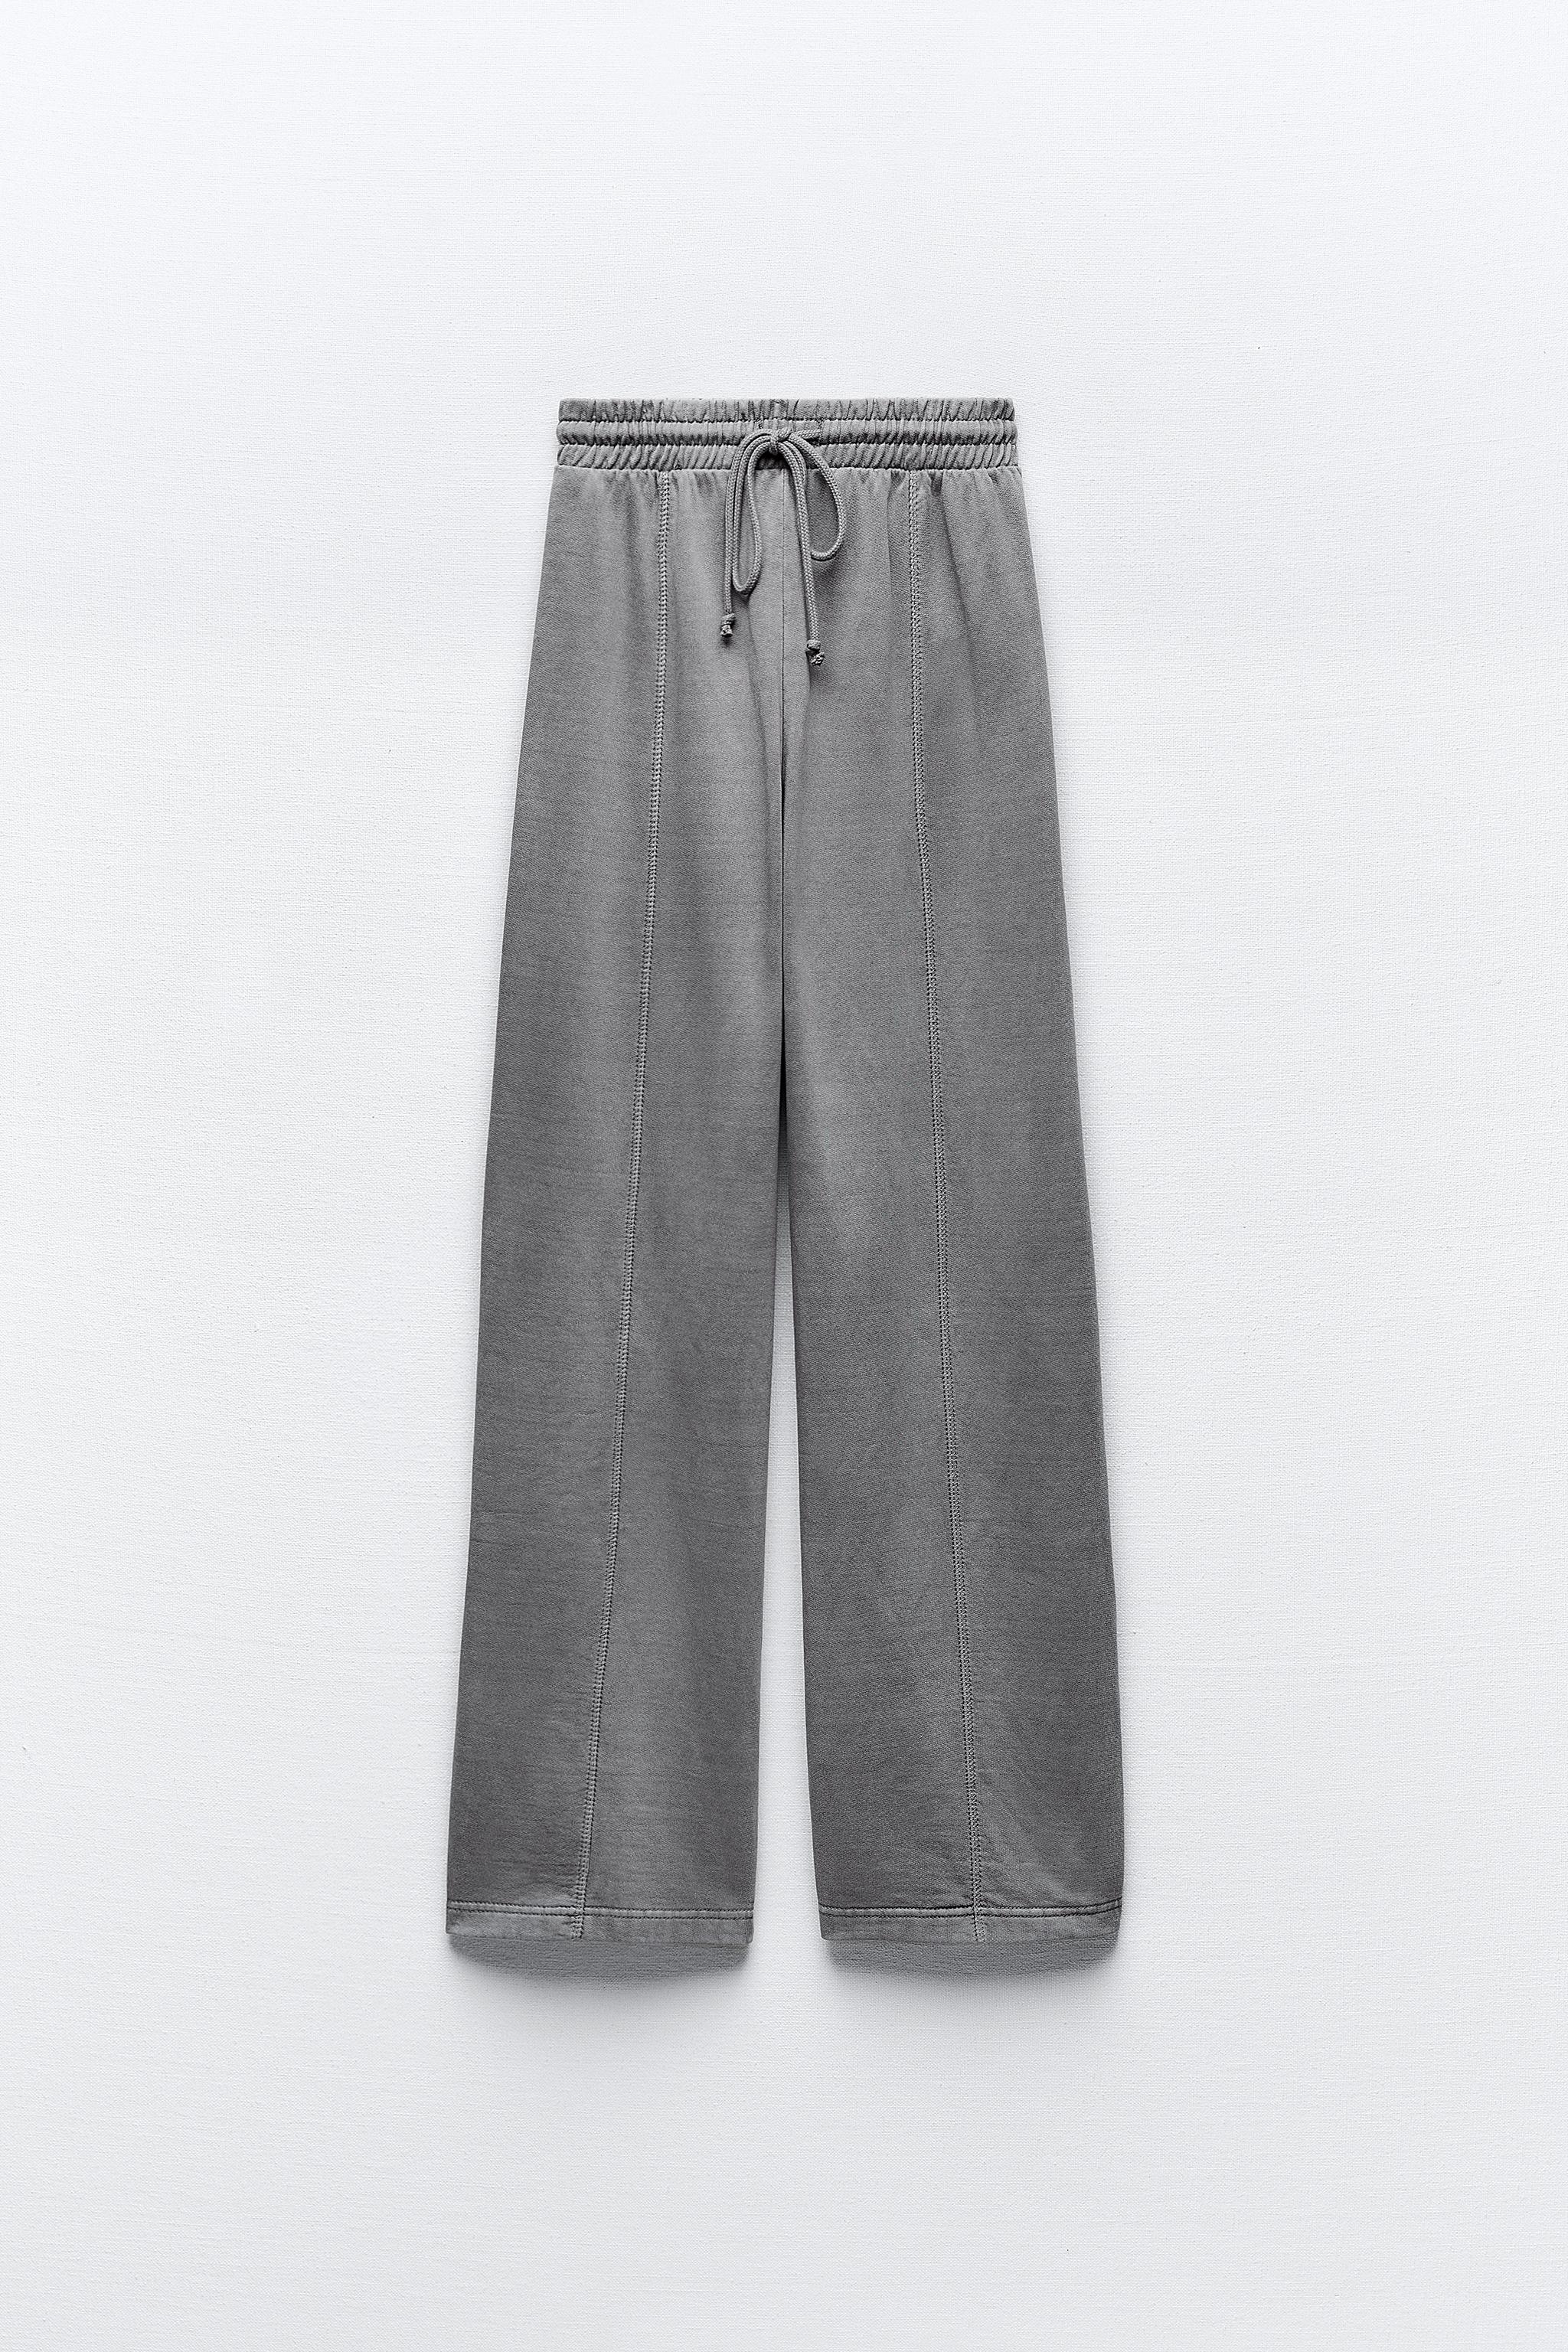 Pants with a high waist with adjustable elastic drawstring waistband.  Straight leg and pronounced seams. - Gray marl